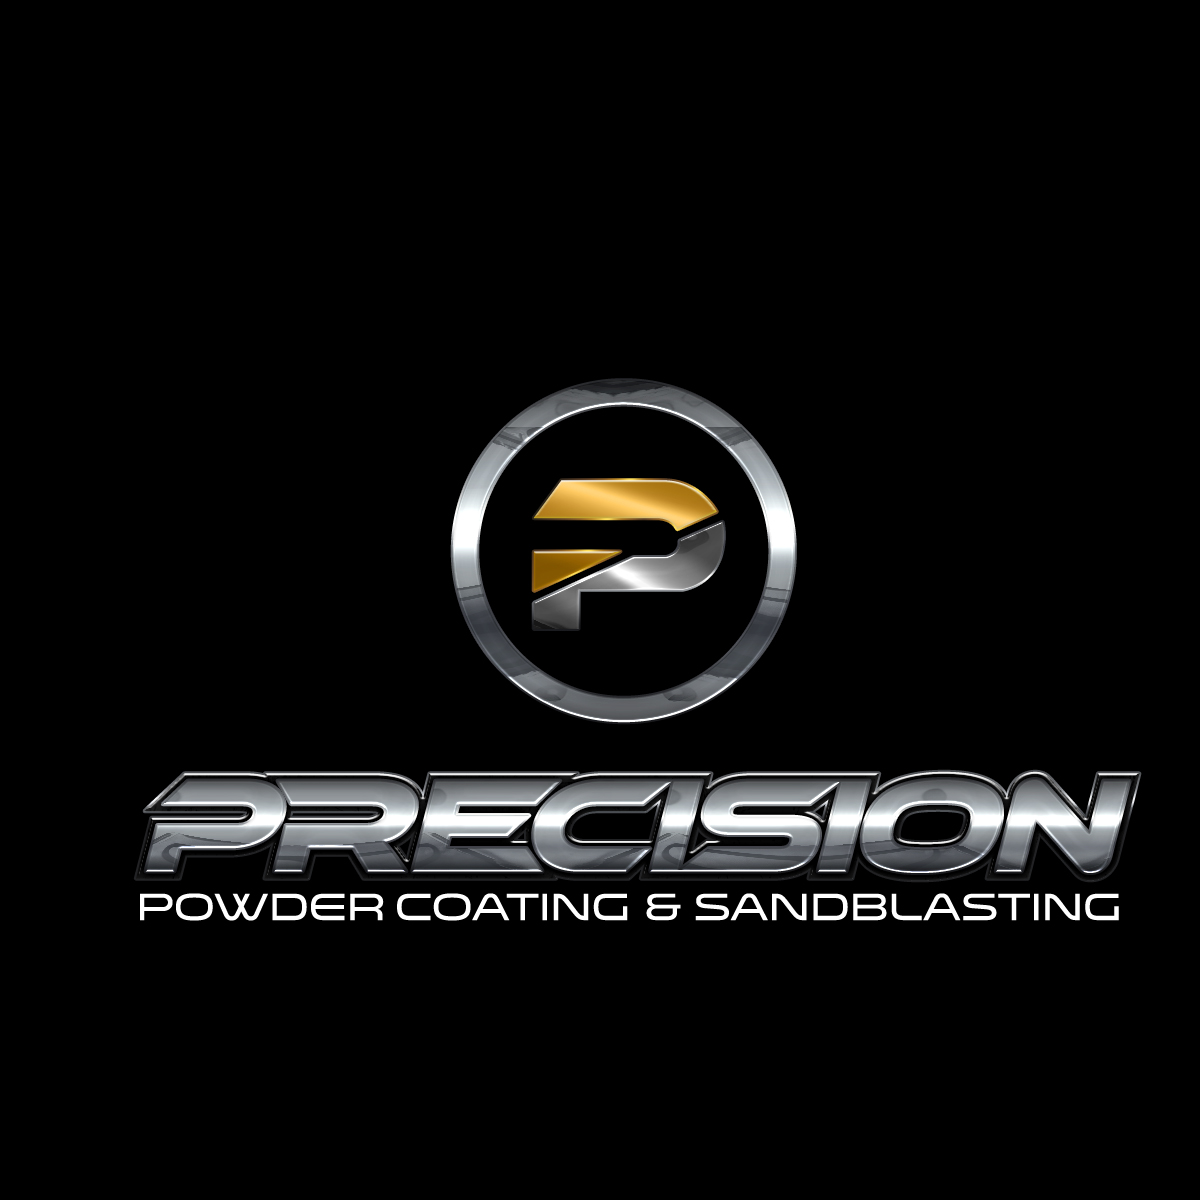 powder coating logo ideas 4